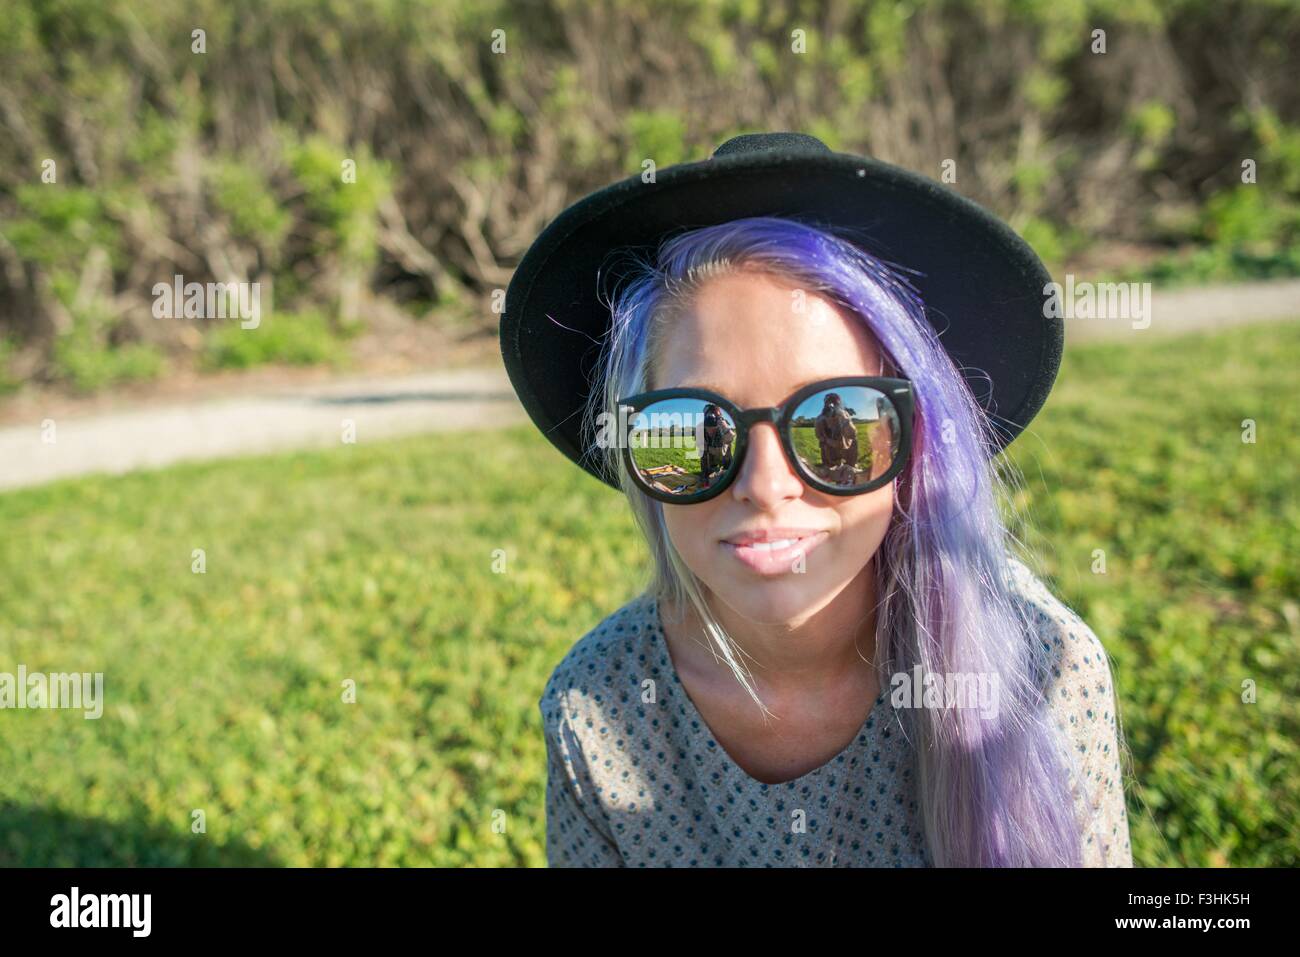 Woman with sun glasses and hat, El Capitan, California, USA Stock Photo